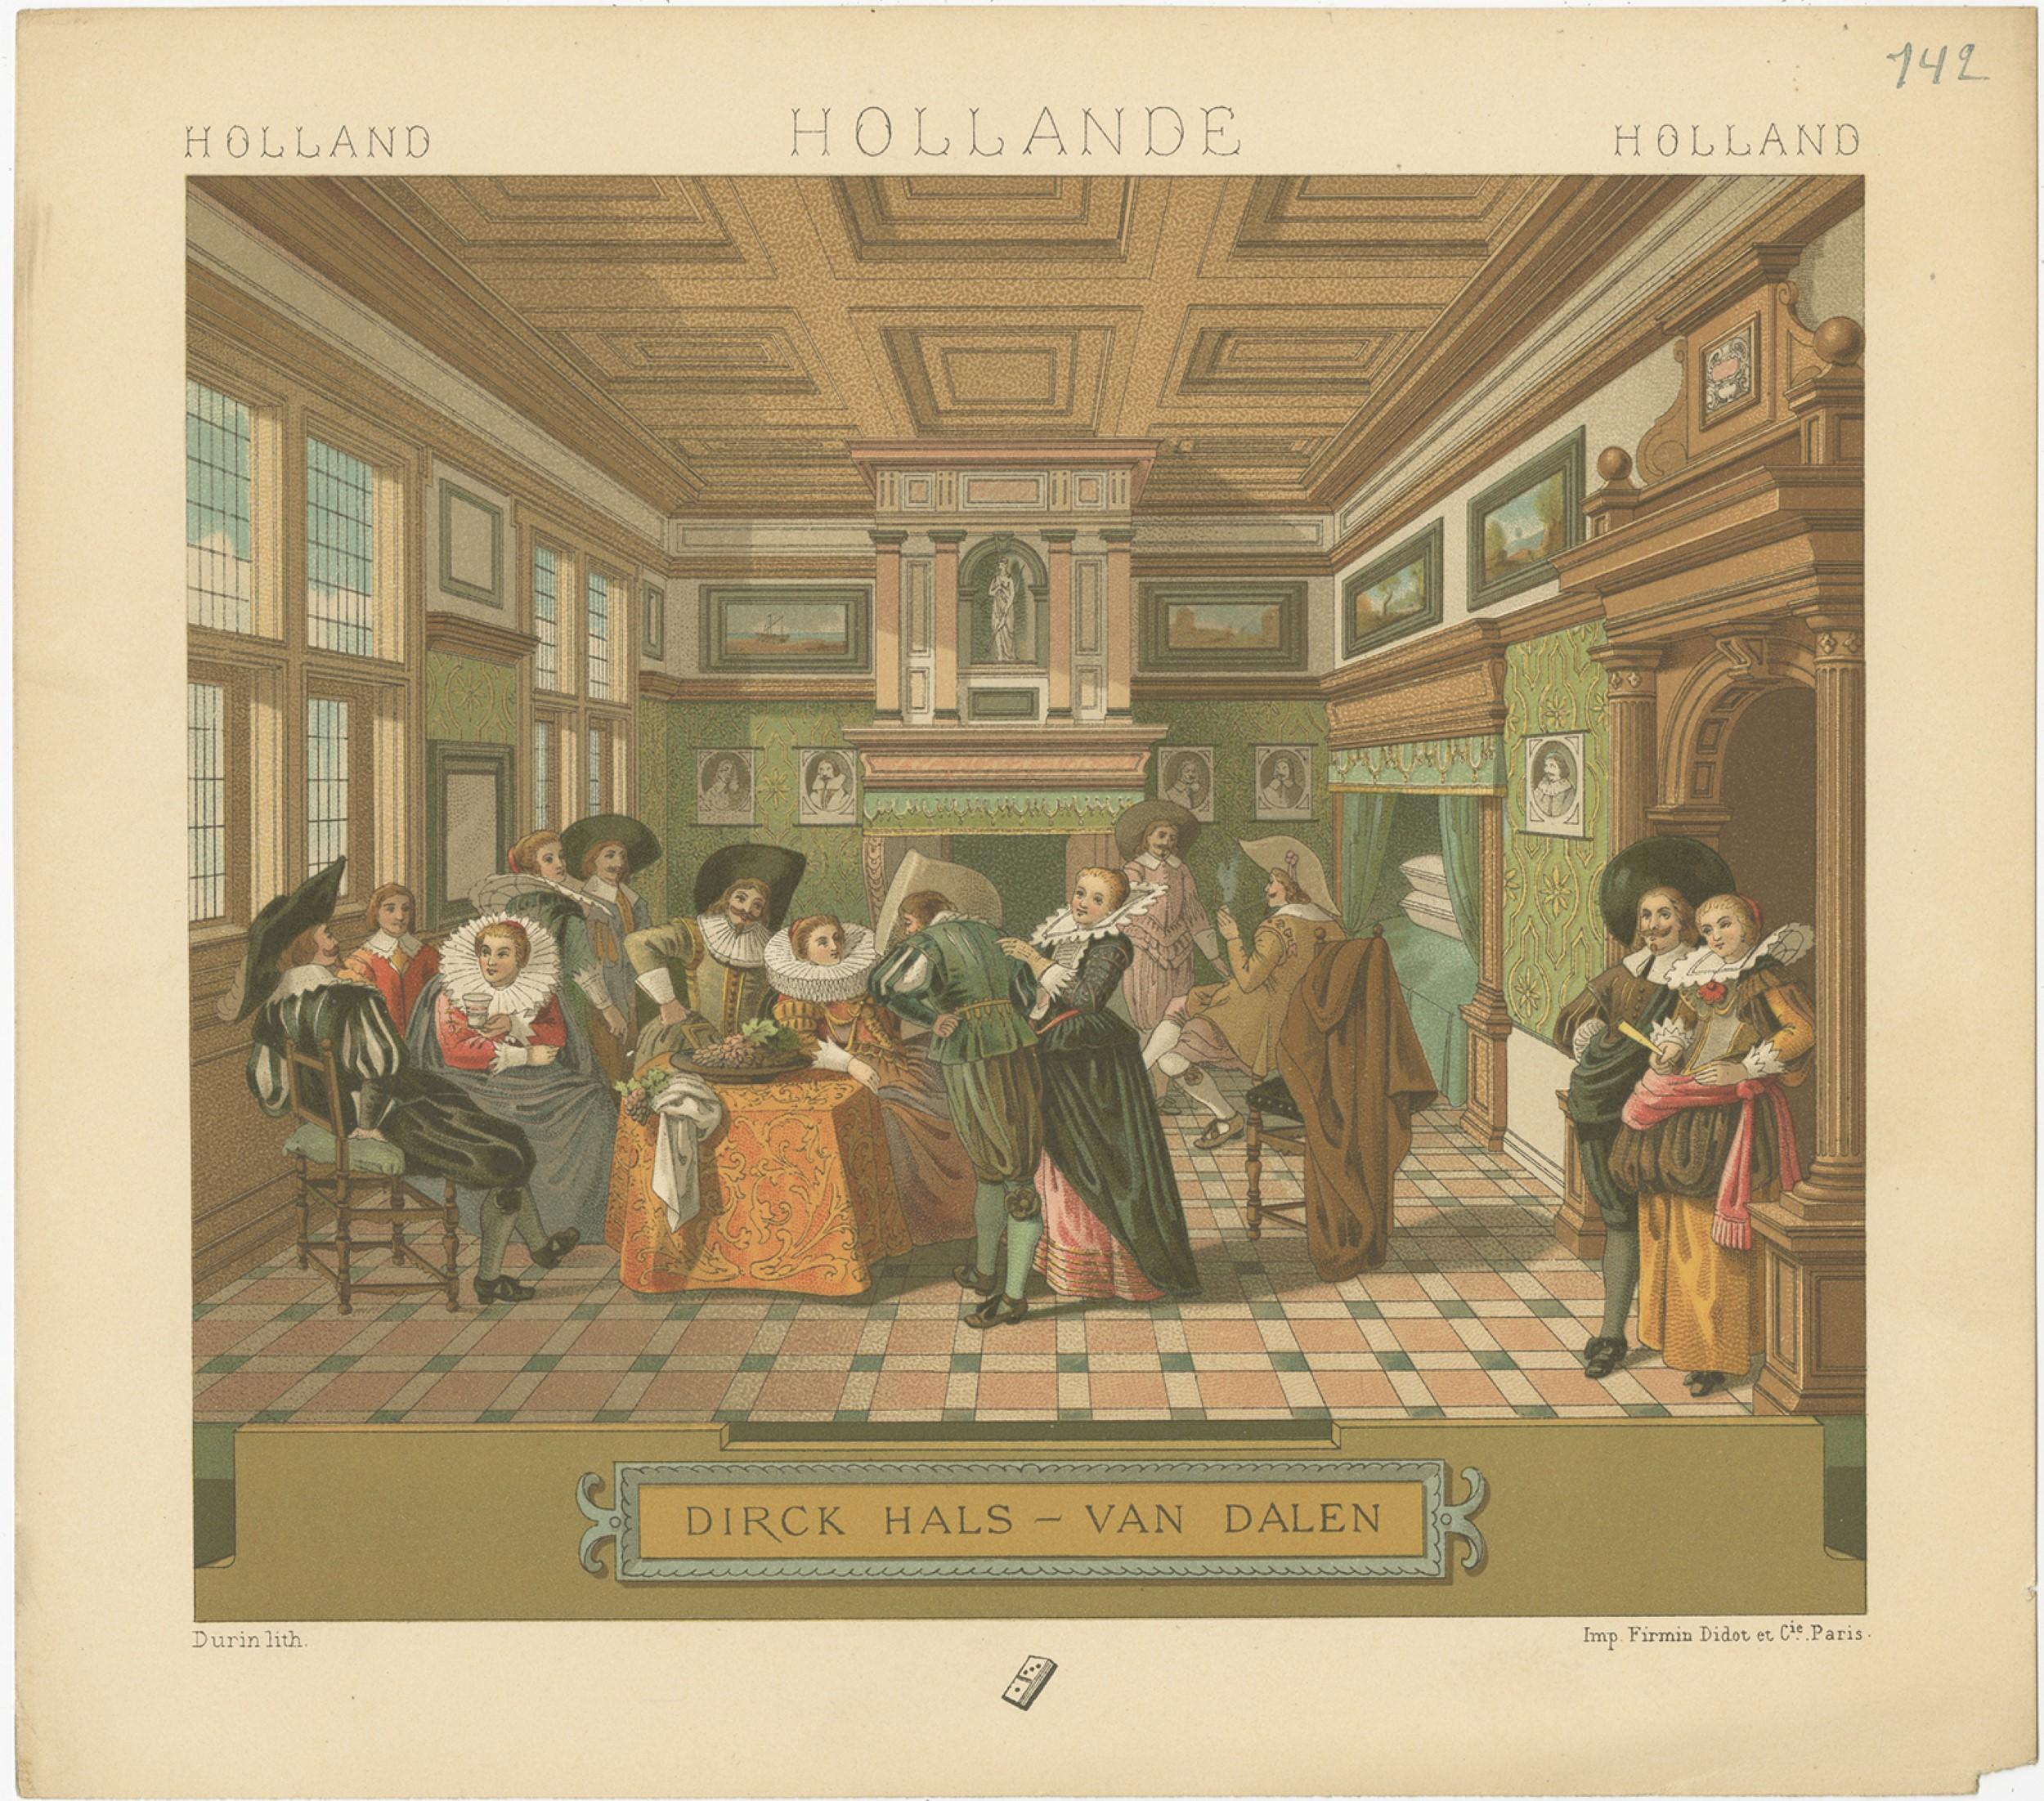 Antique print titled 'Holland - Hollande - Holland'. Chromolithograph of Holland - Dirck Hals Van Dalen. This print originates from 'Le Costume Historique' by M.A. Racinet. Published, circa 1880.
 
   